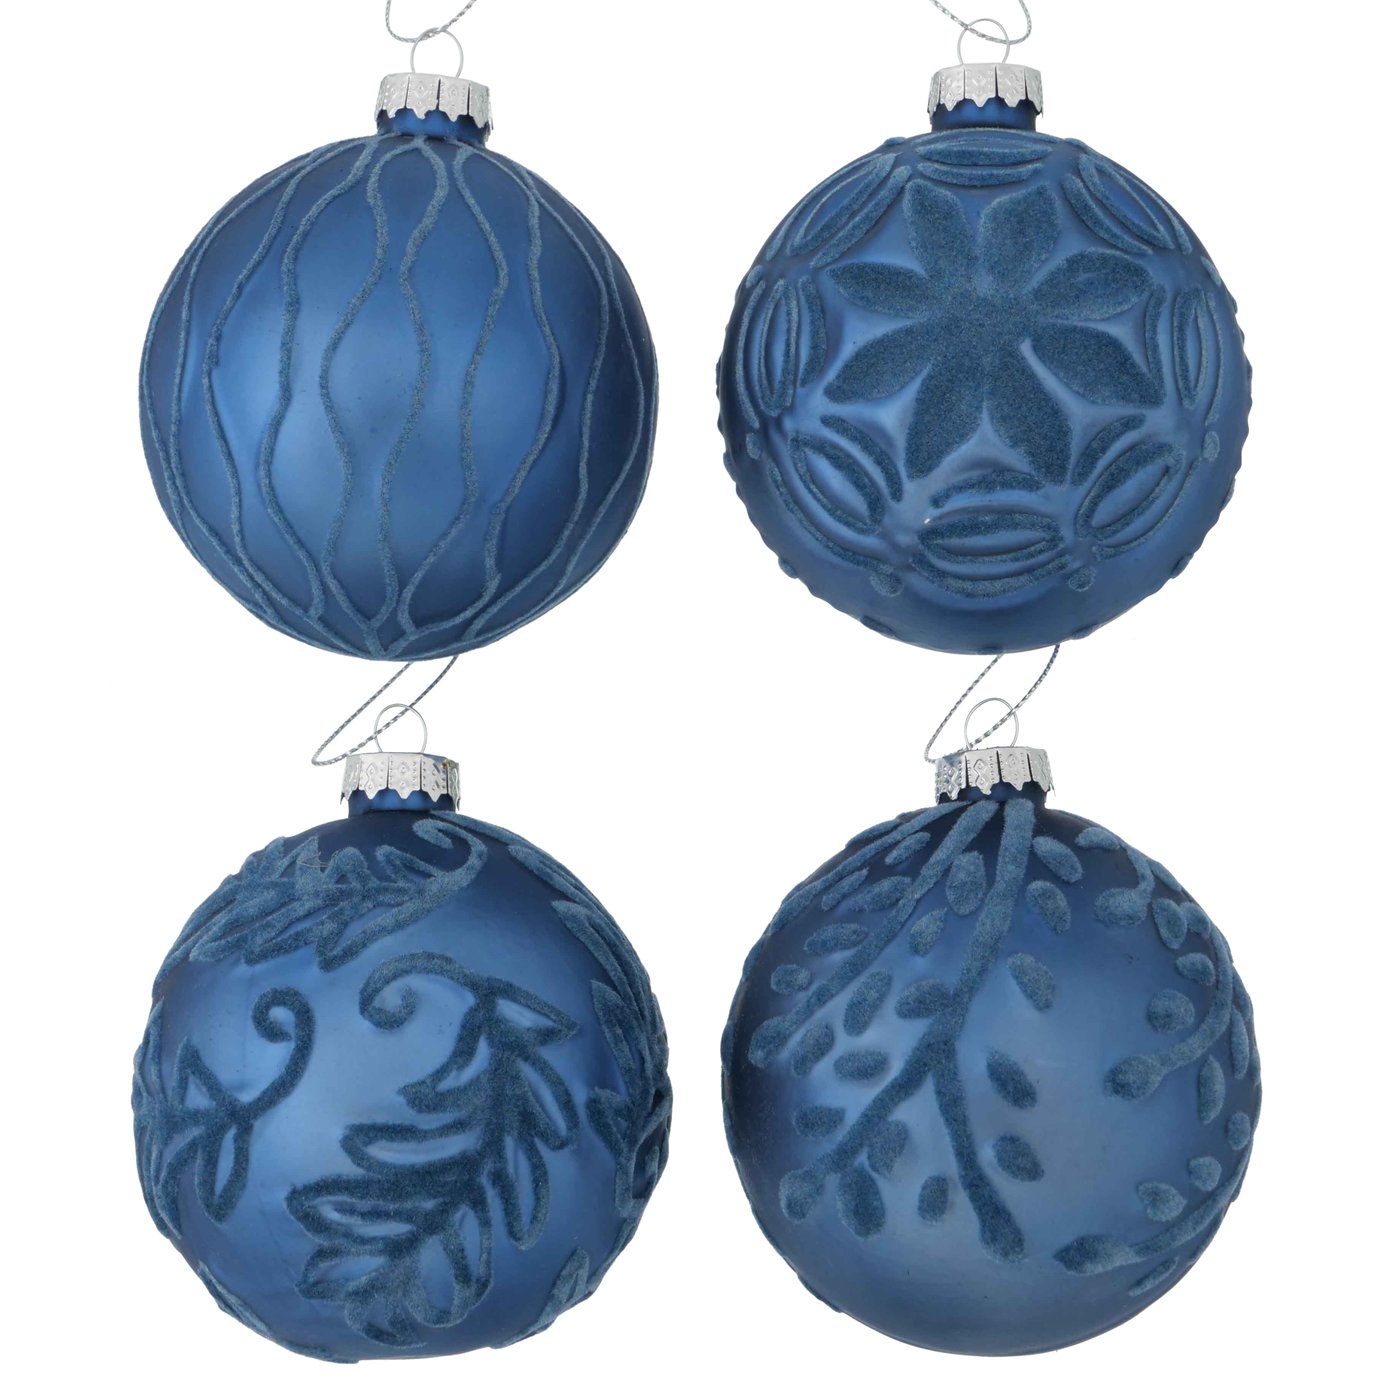 Edle Weihnachtskugel "Folka" hellblau blau silber 12er Set - D 8cm-Copy, 2003367, 4020607769564, Christbaumkugel, Weihnachtsbaumkugel